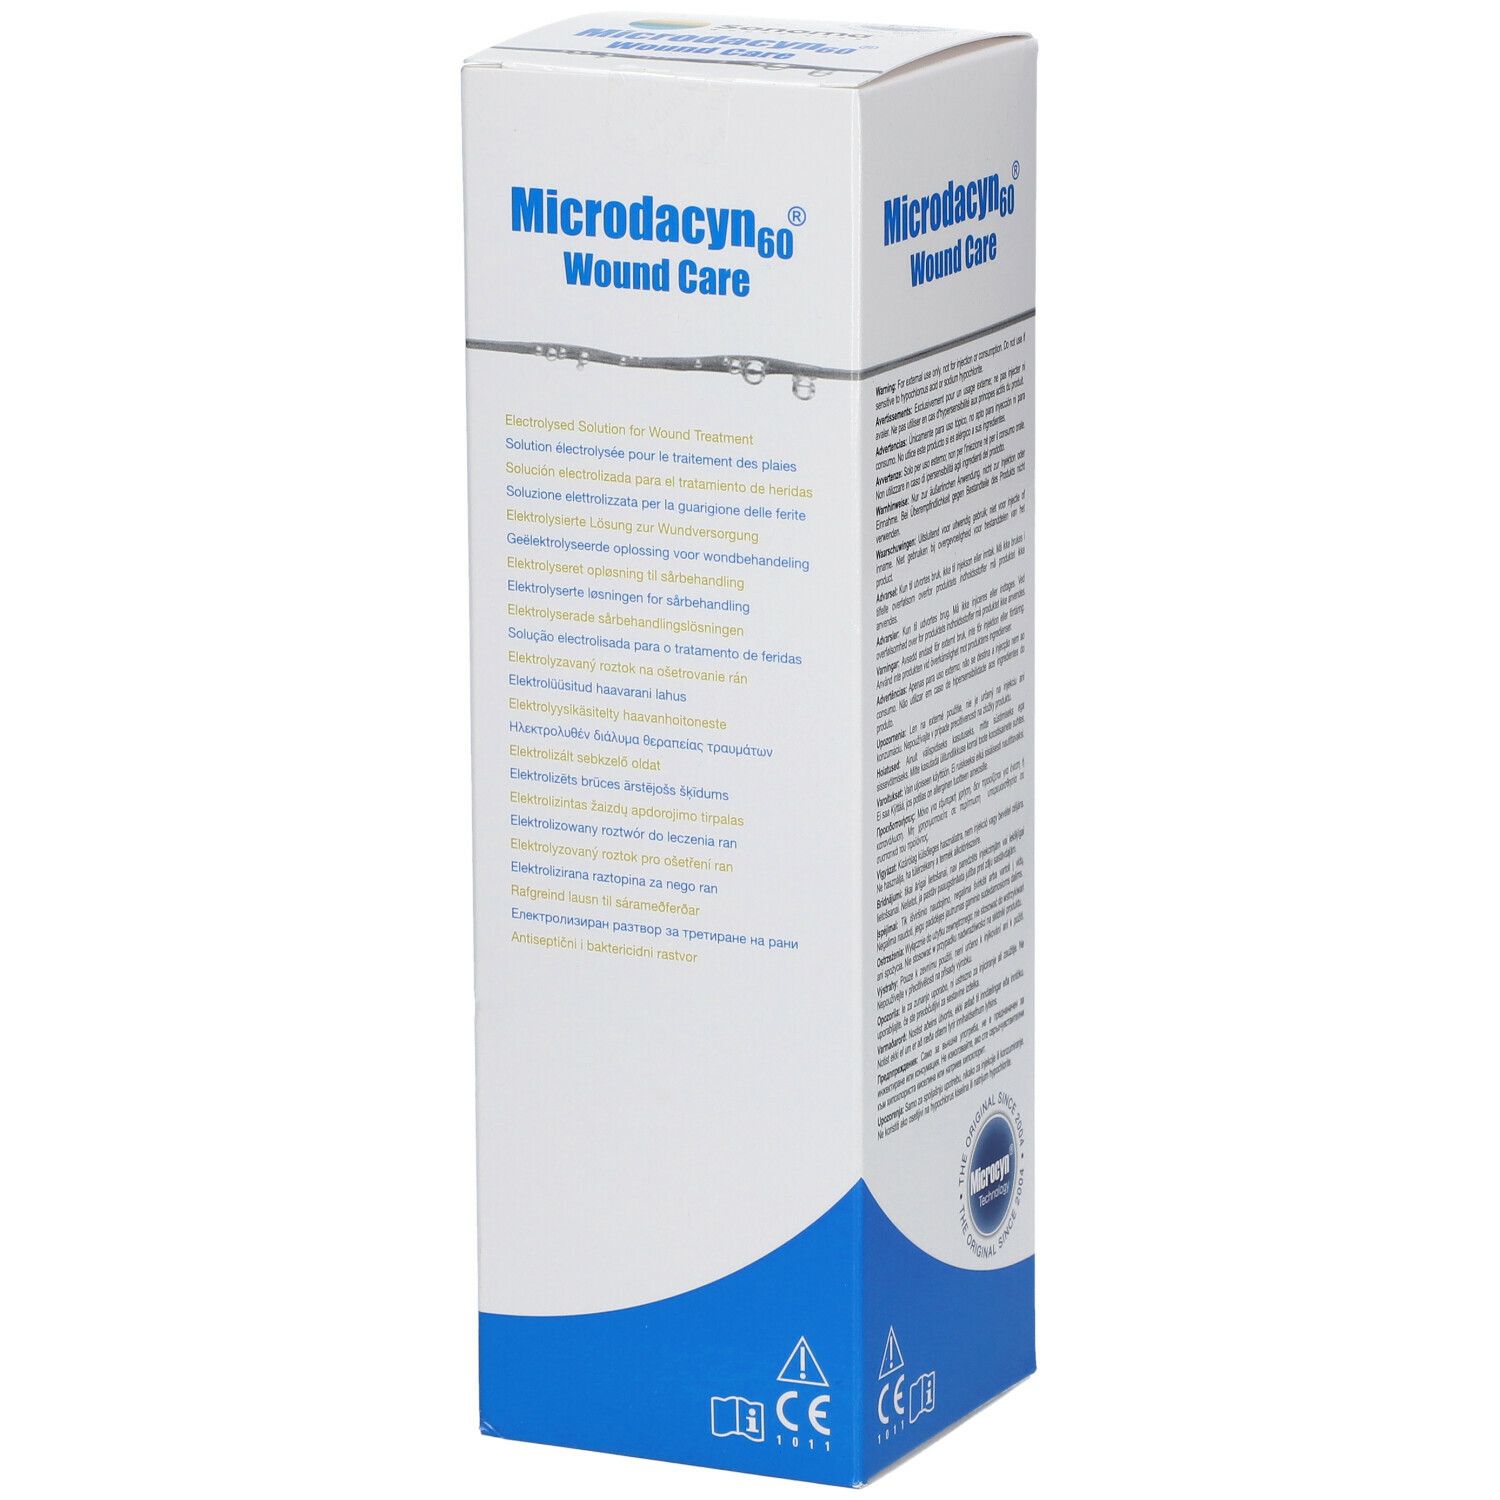 Microdacyn60® Wound care